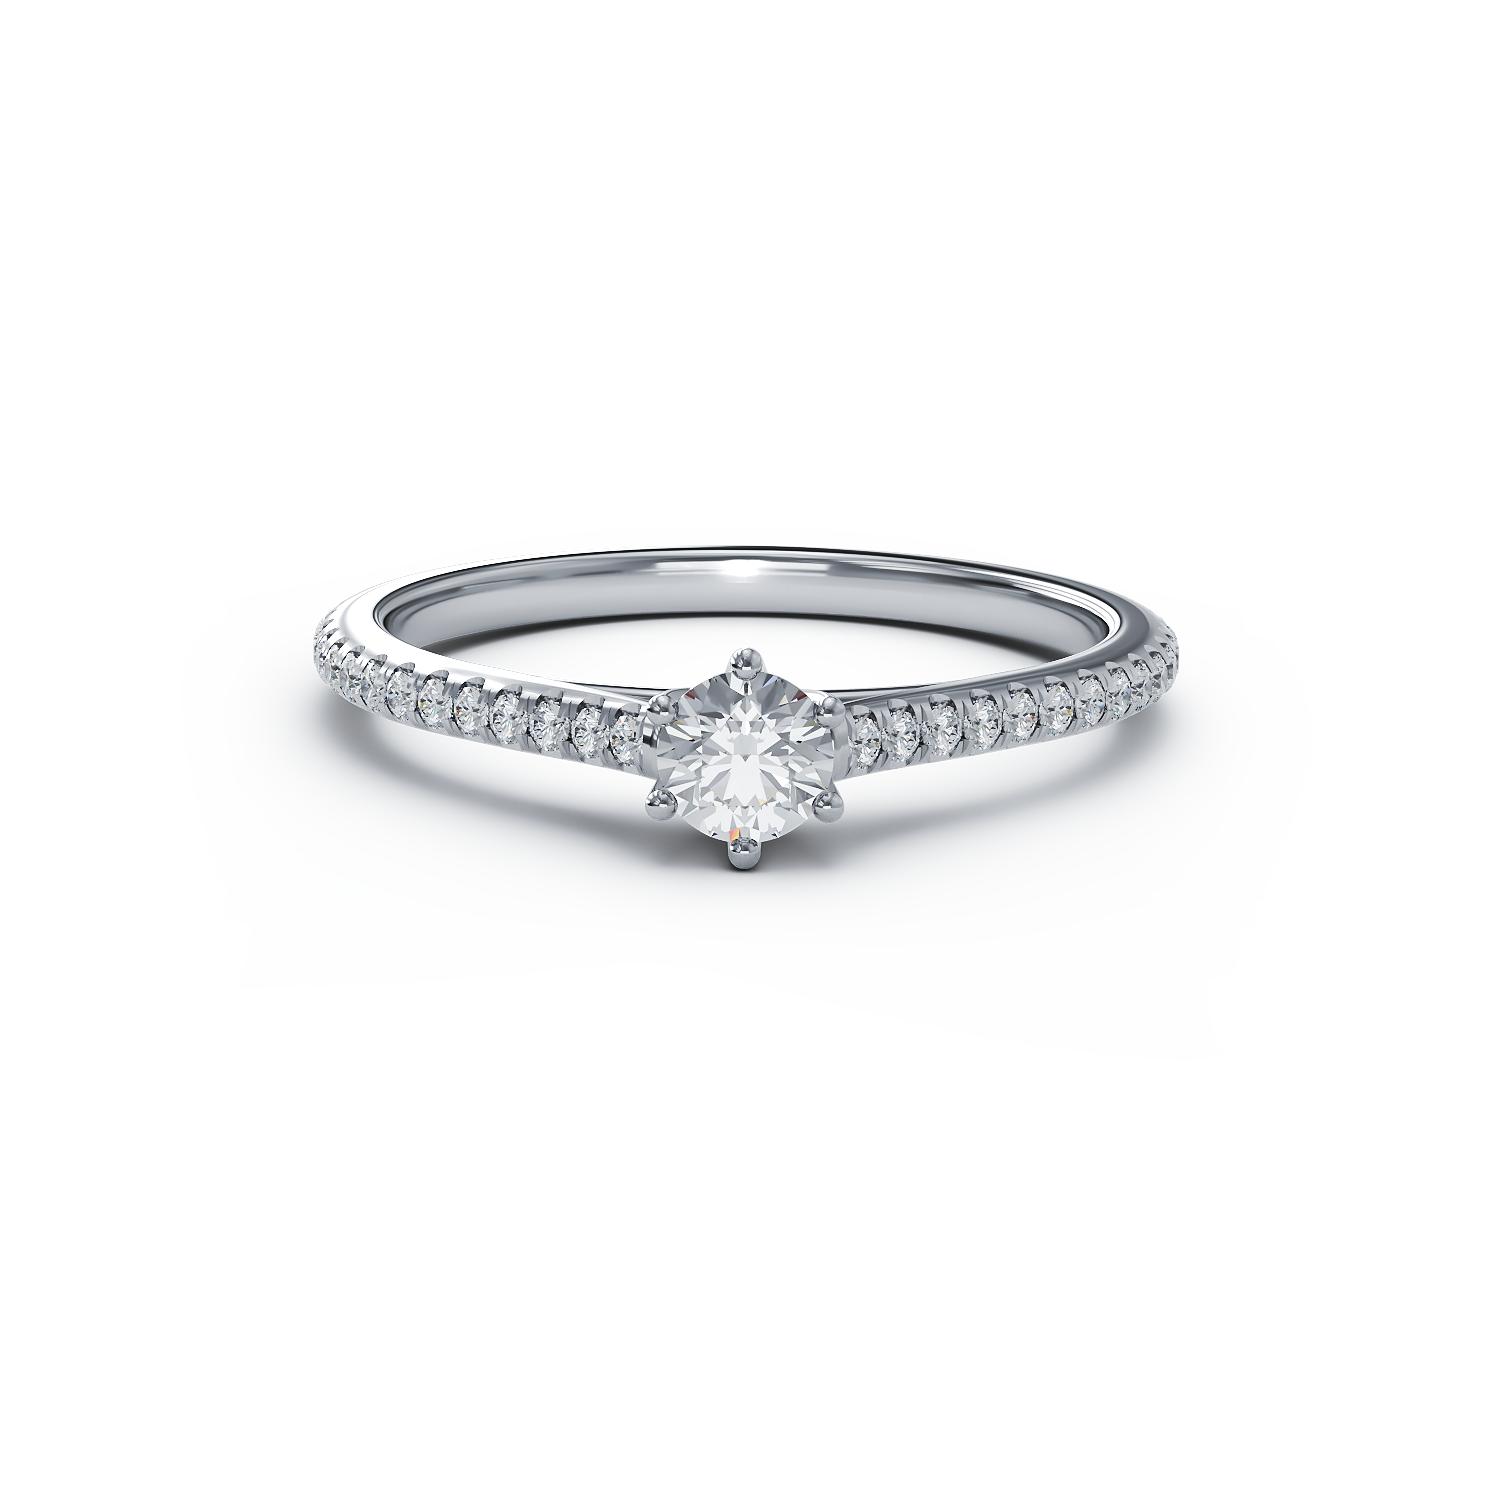 Platinum engagement ring with 0.19ct diamond and 0.175ct diamonds